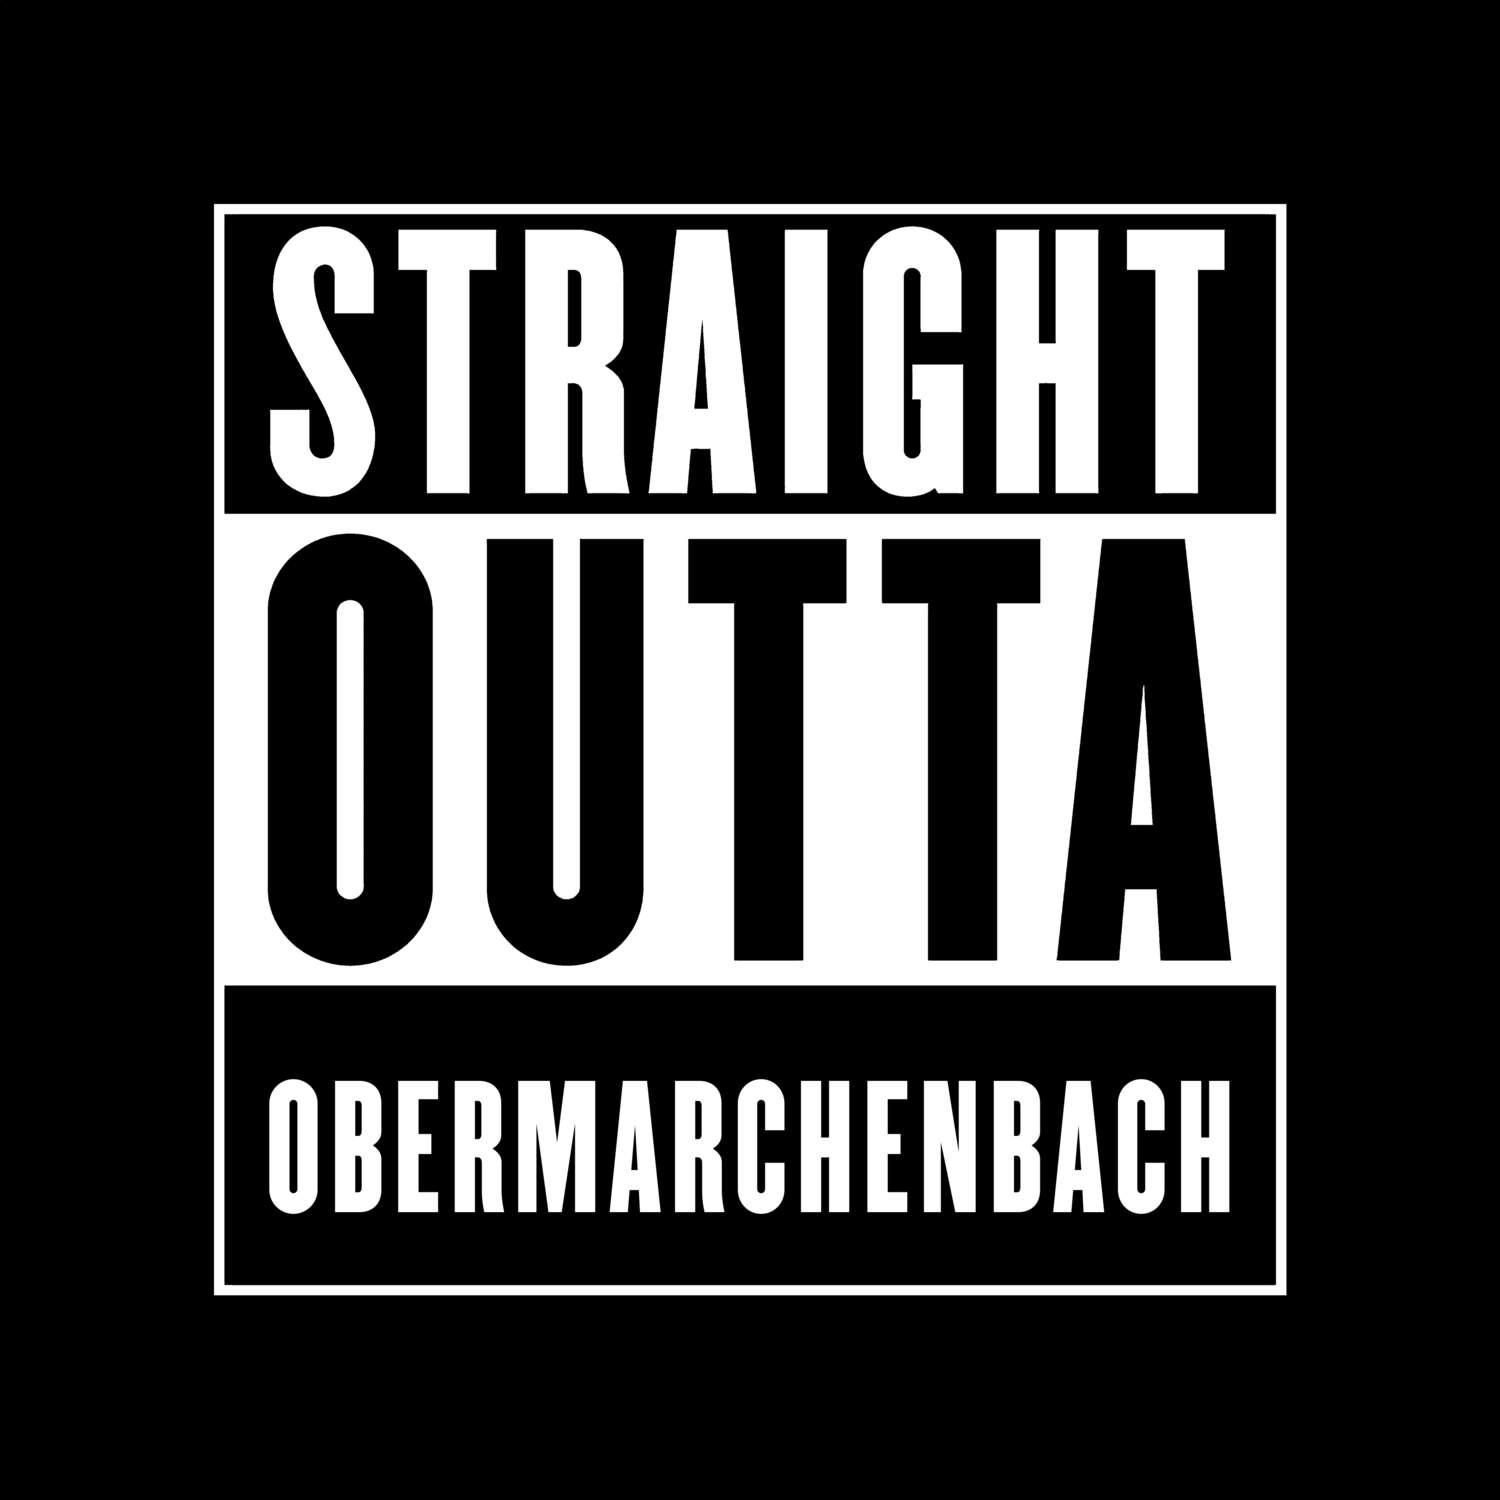 Obermarchenbach T-Shirt »Straight Outta«